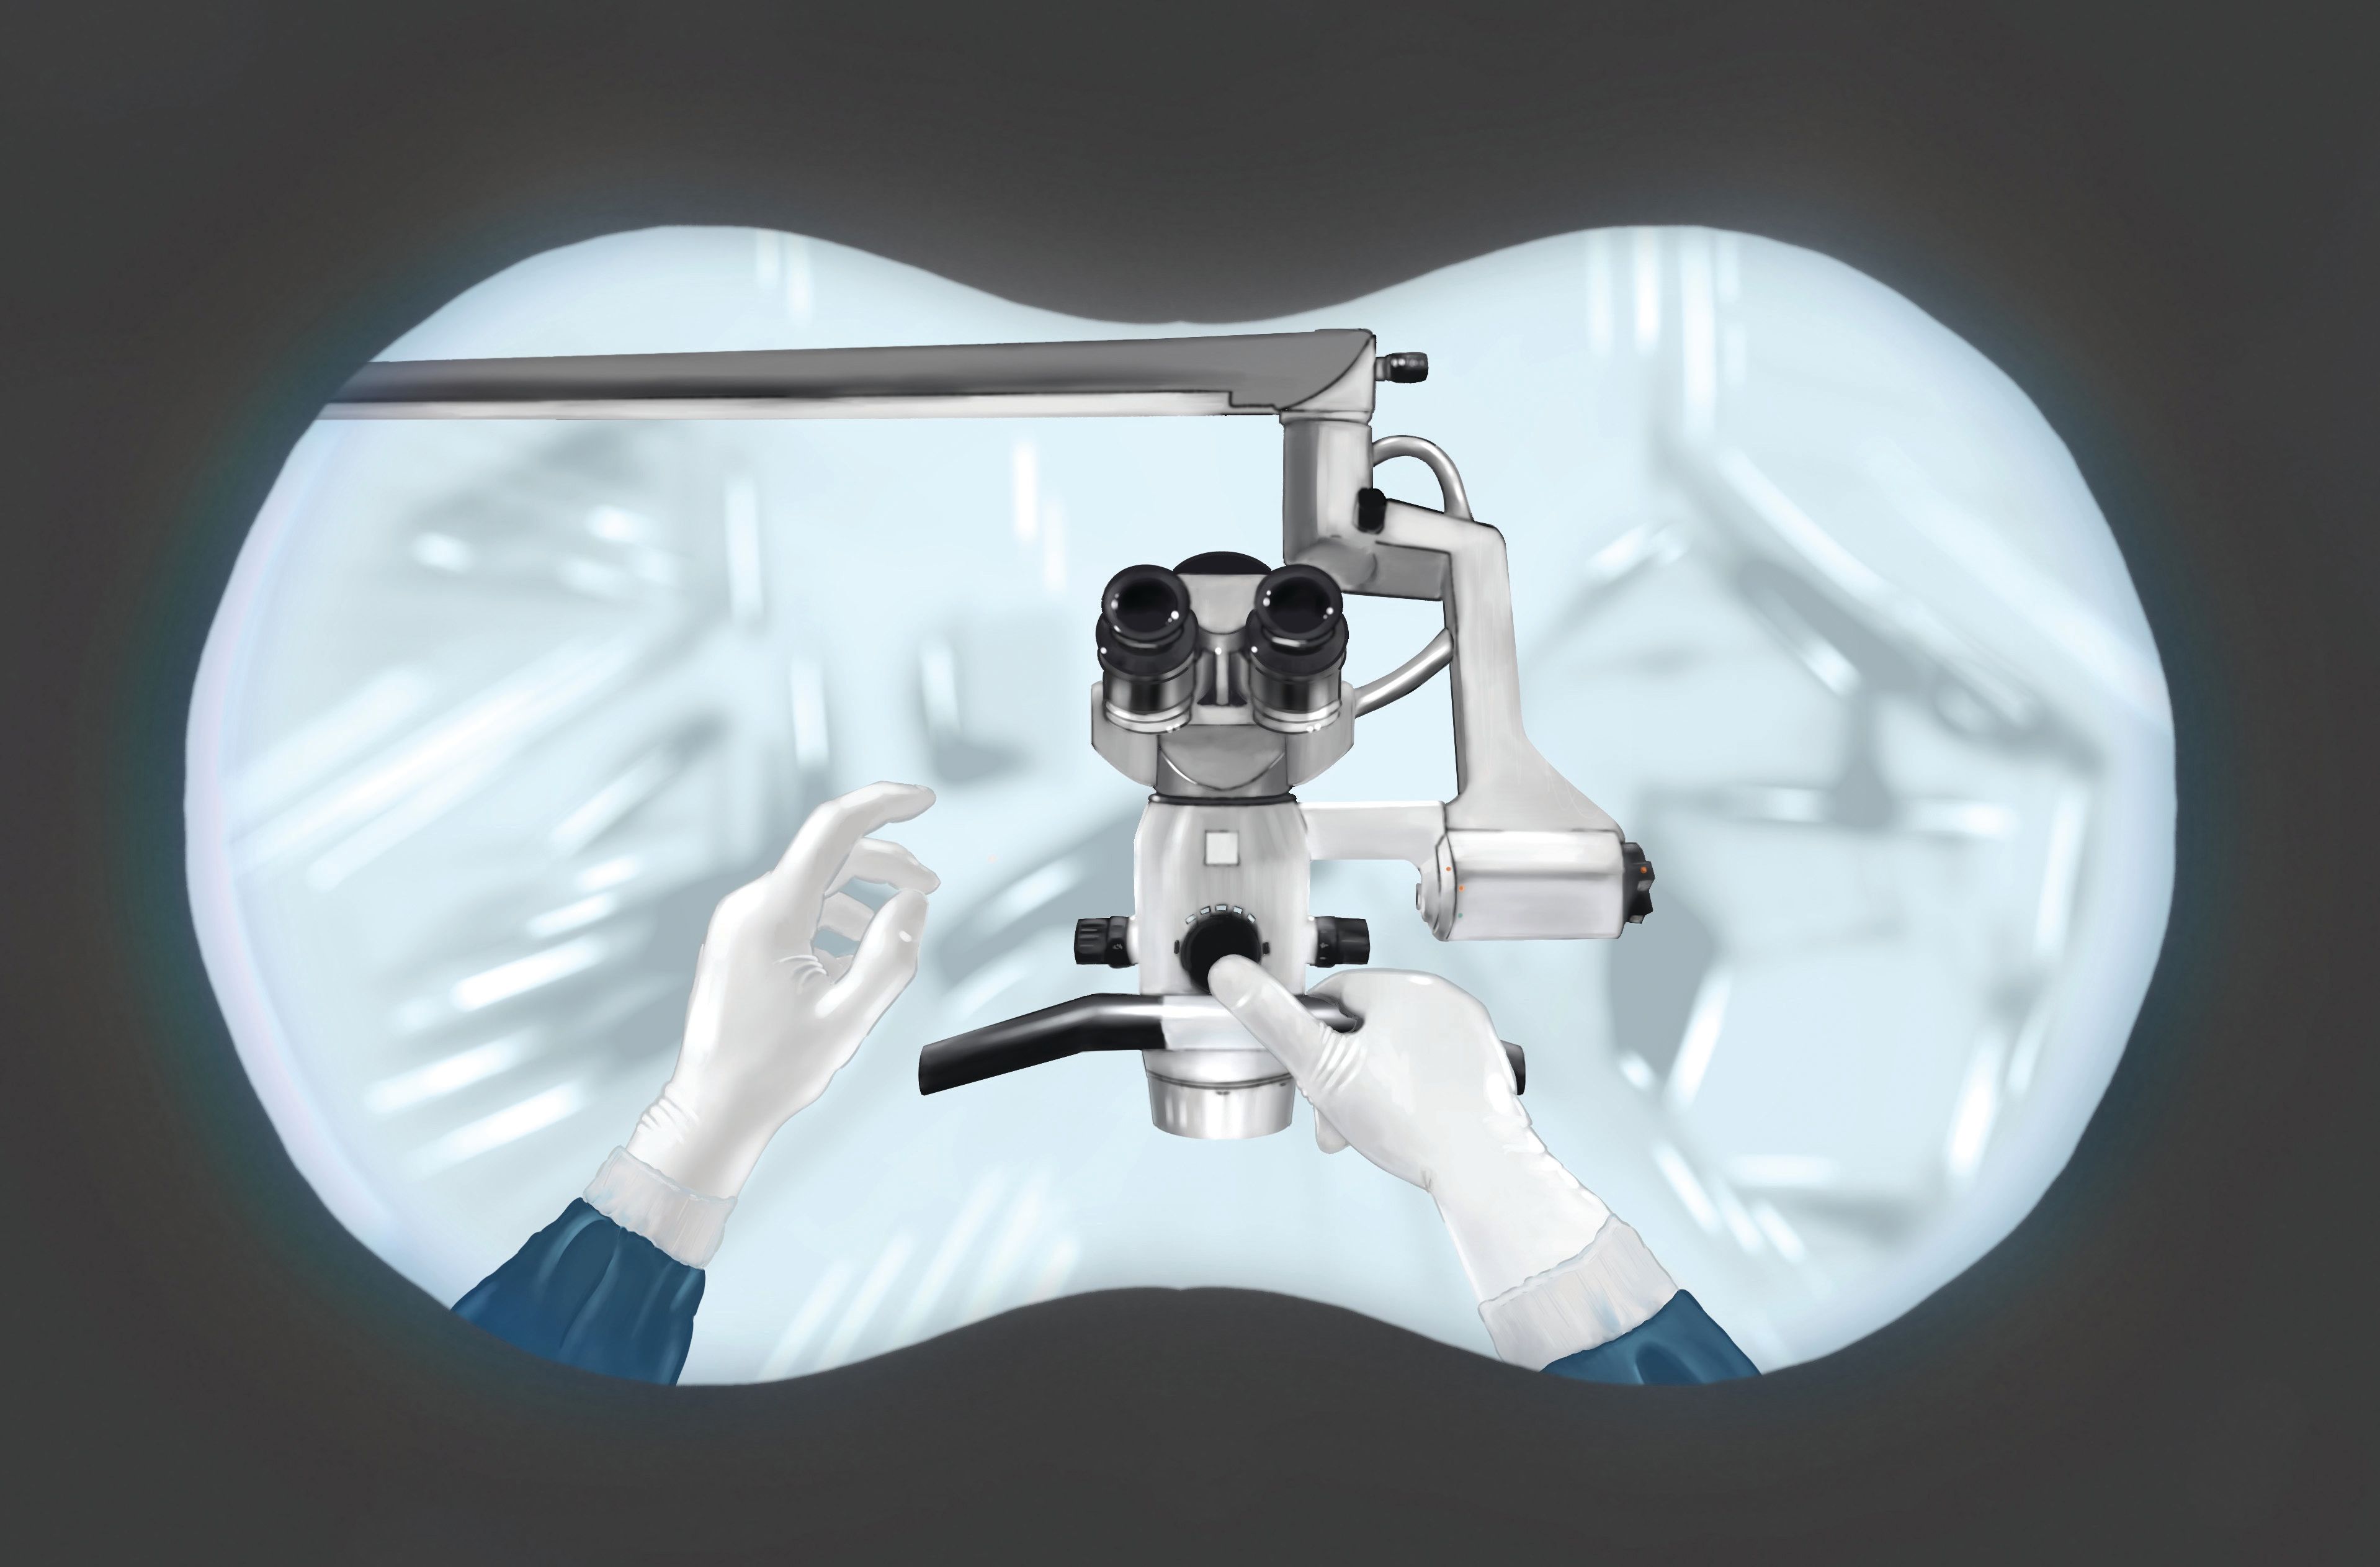 Virtual reality simulator will improve access to vitreoretinal surgery training